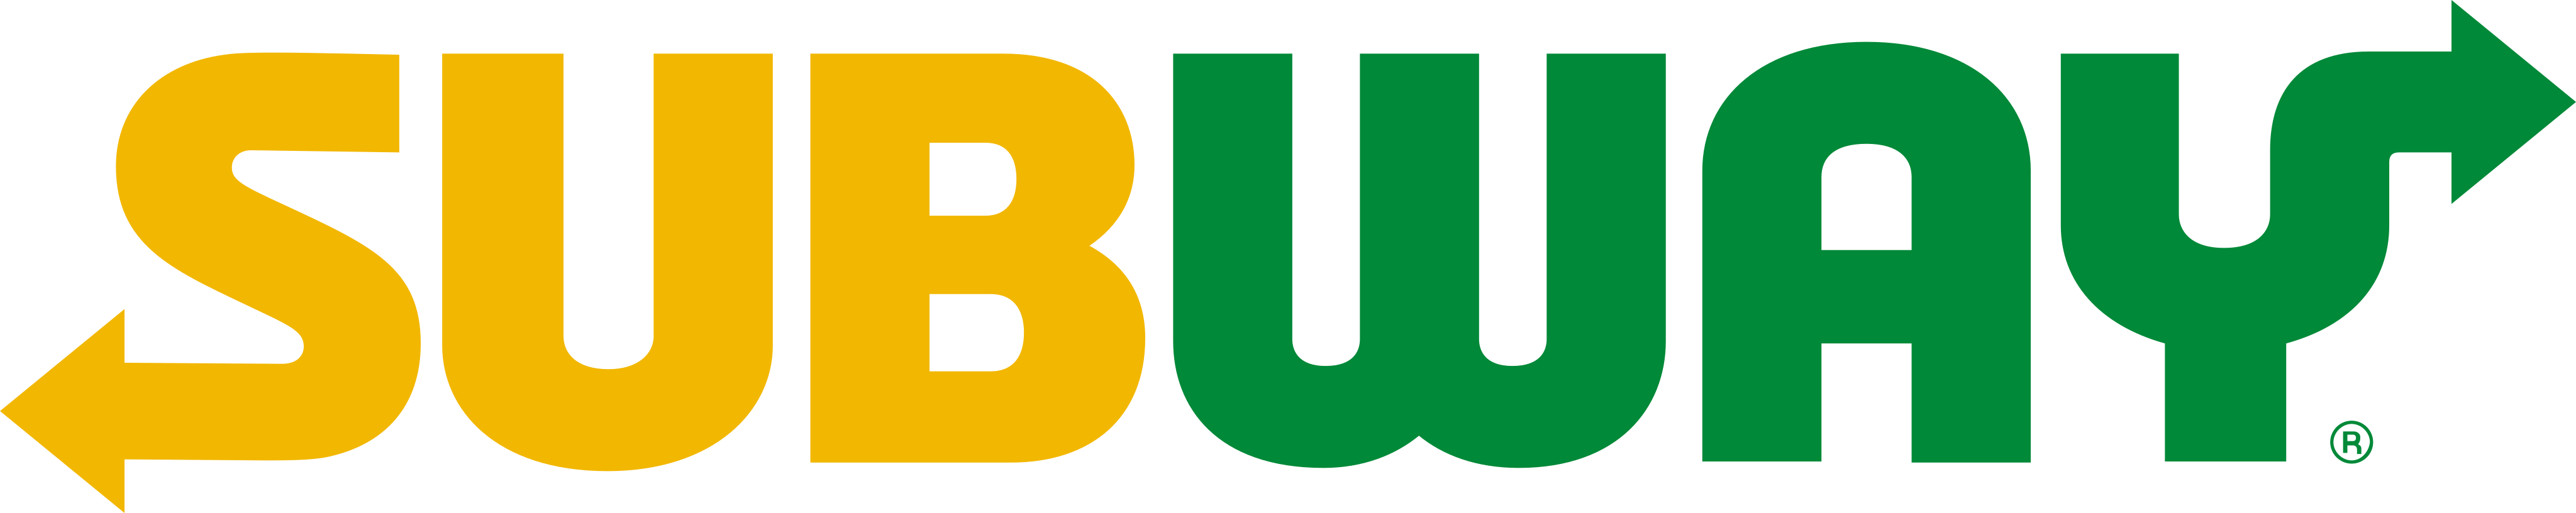 subway logo 8 - Subway Logo